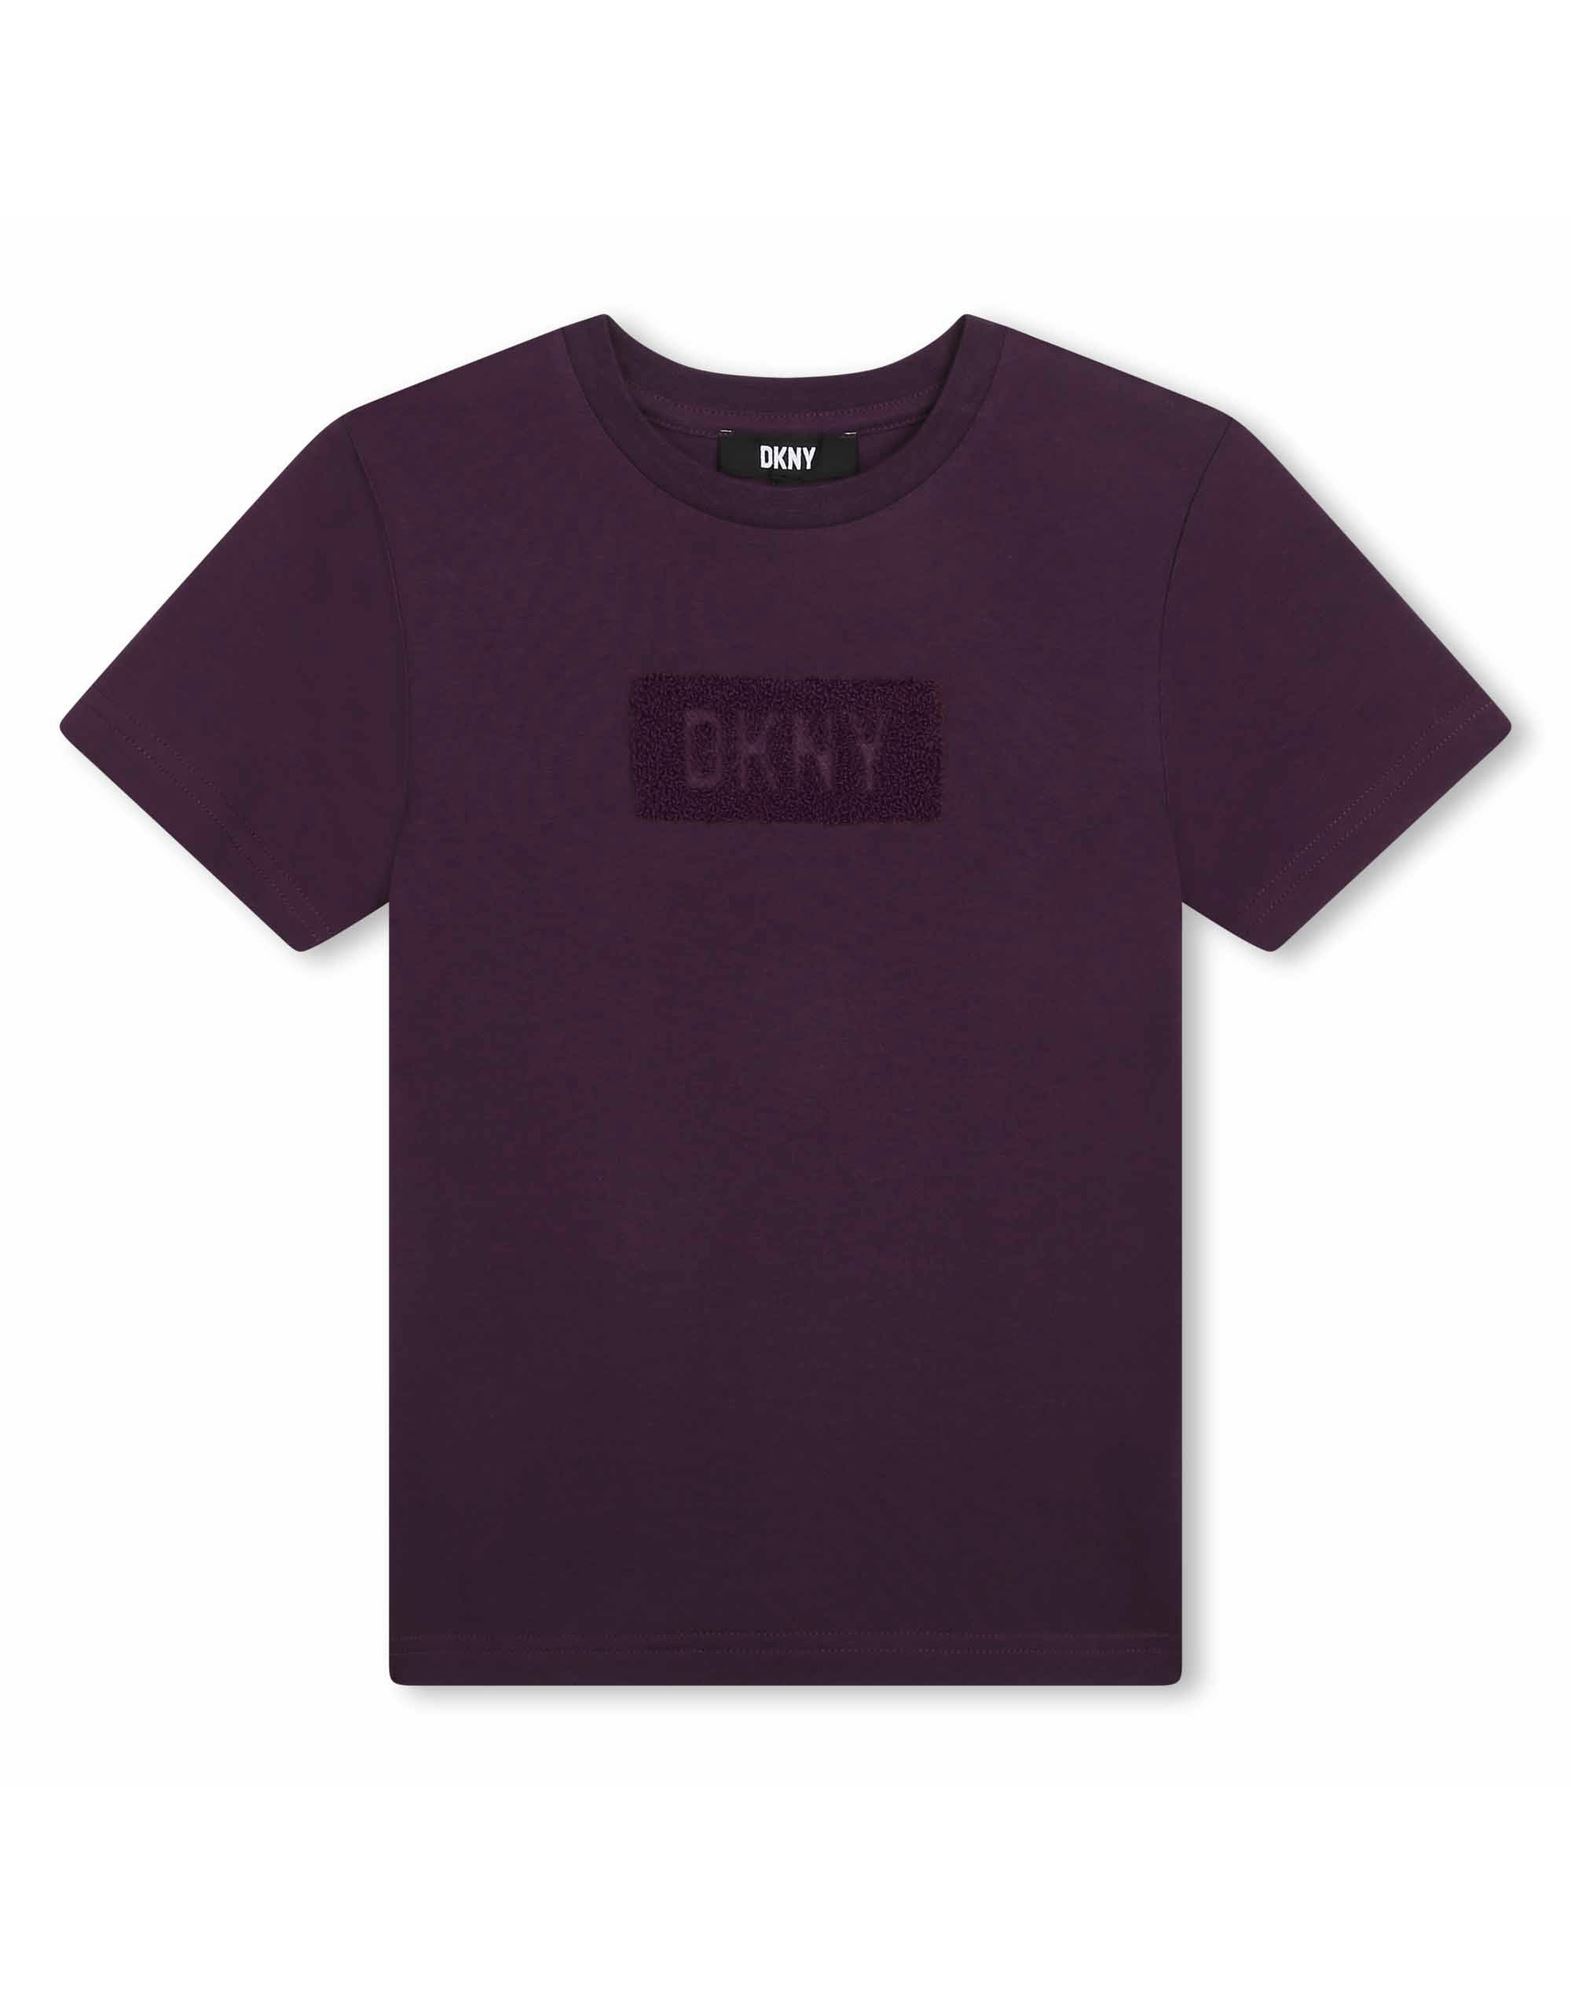 DKNY T-shirts Kinder Violett von DKNY